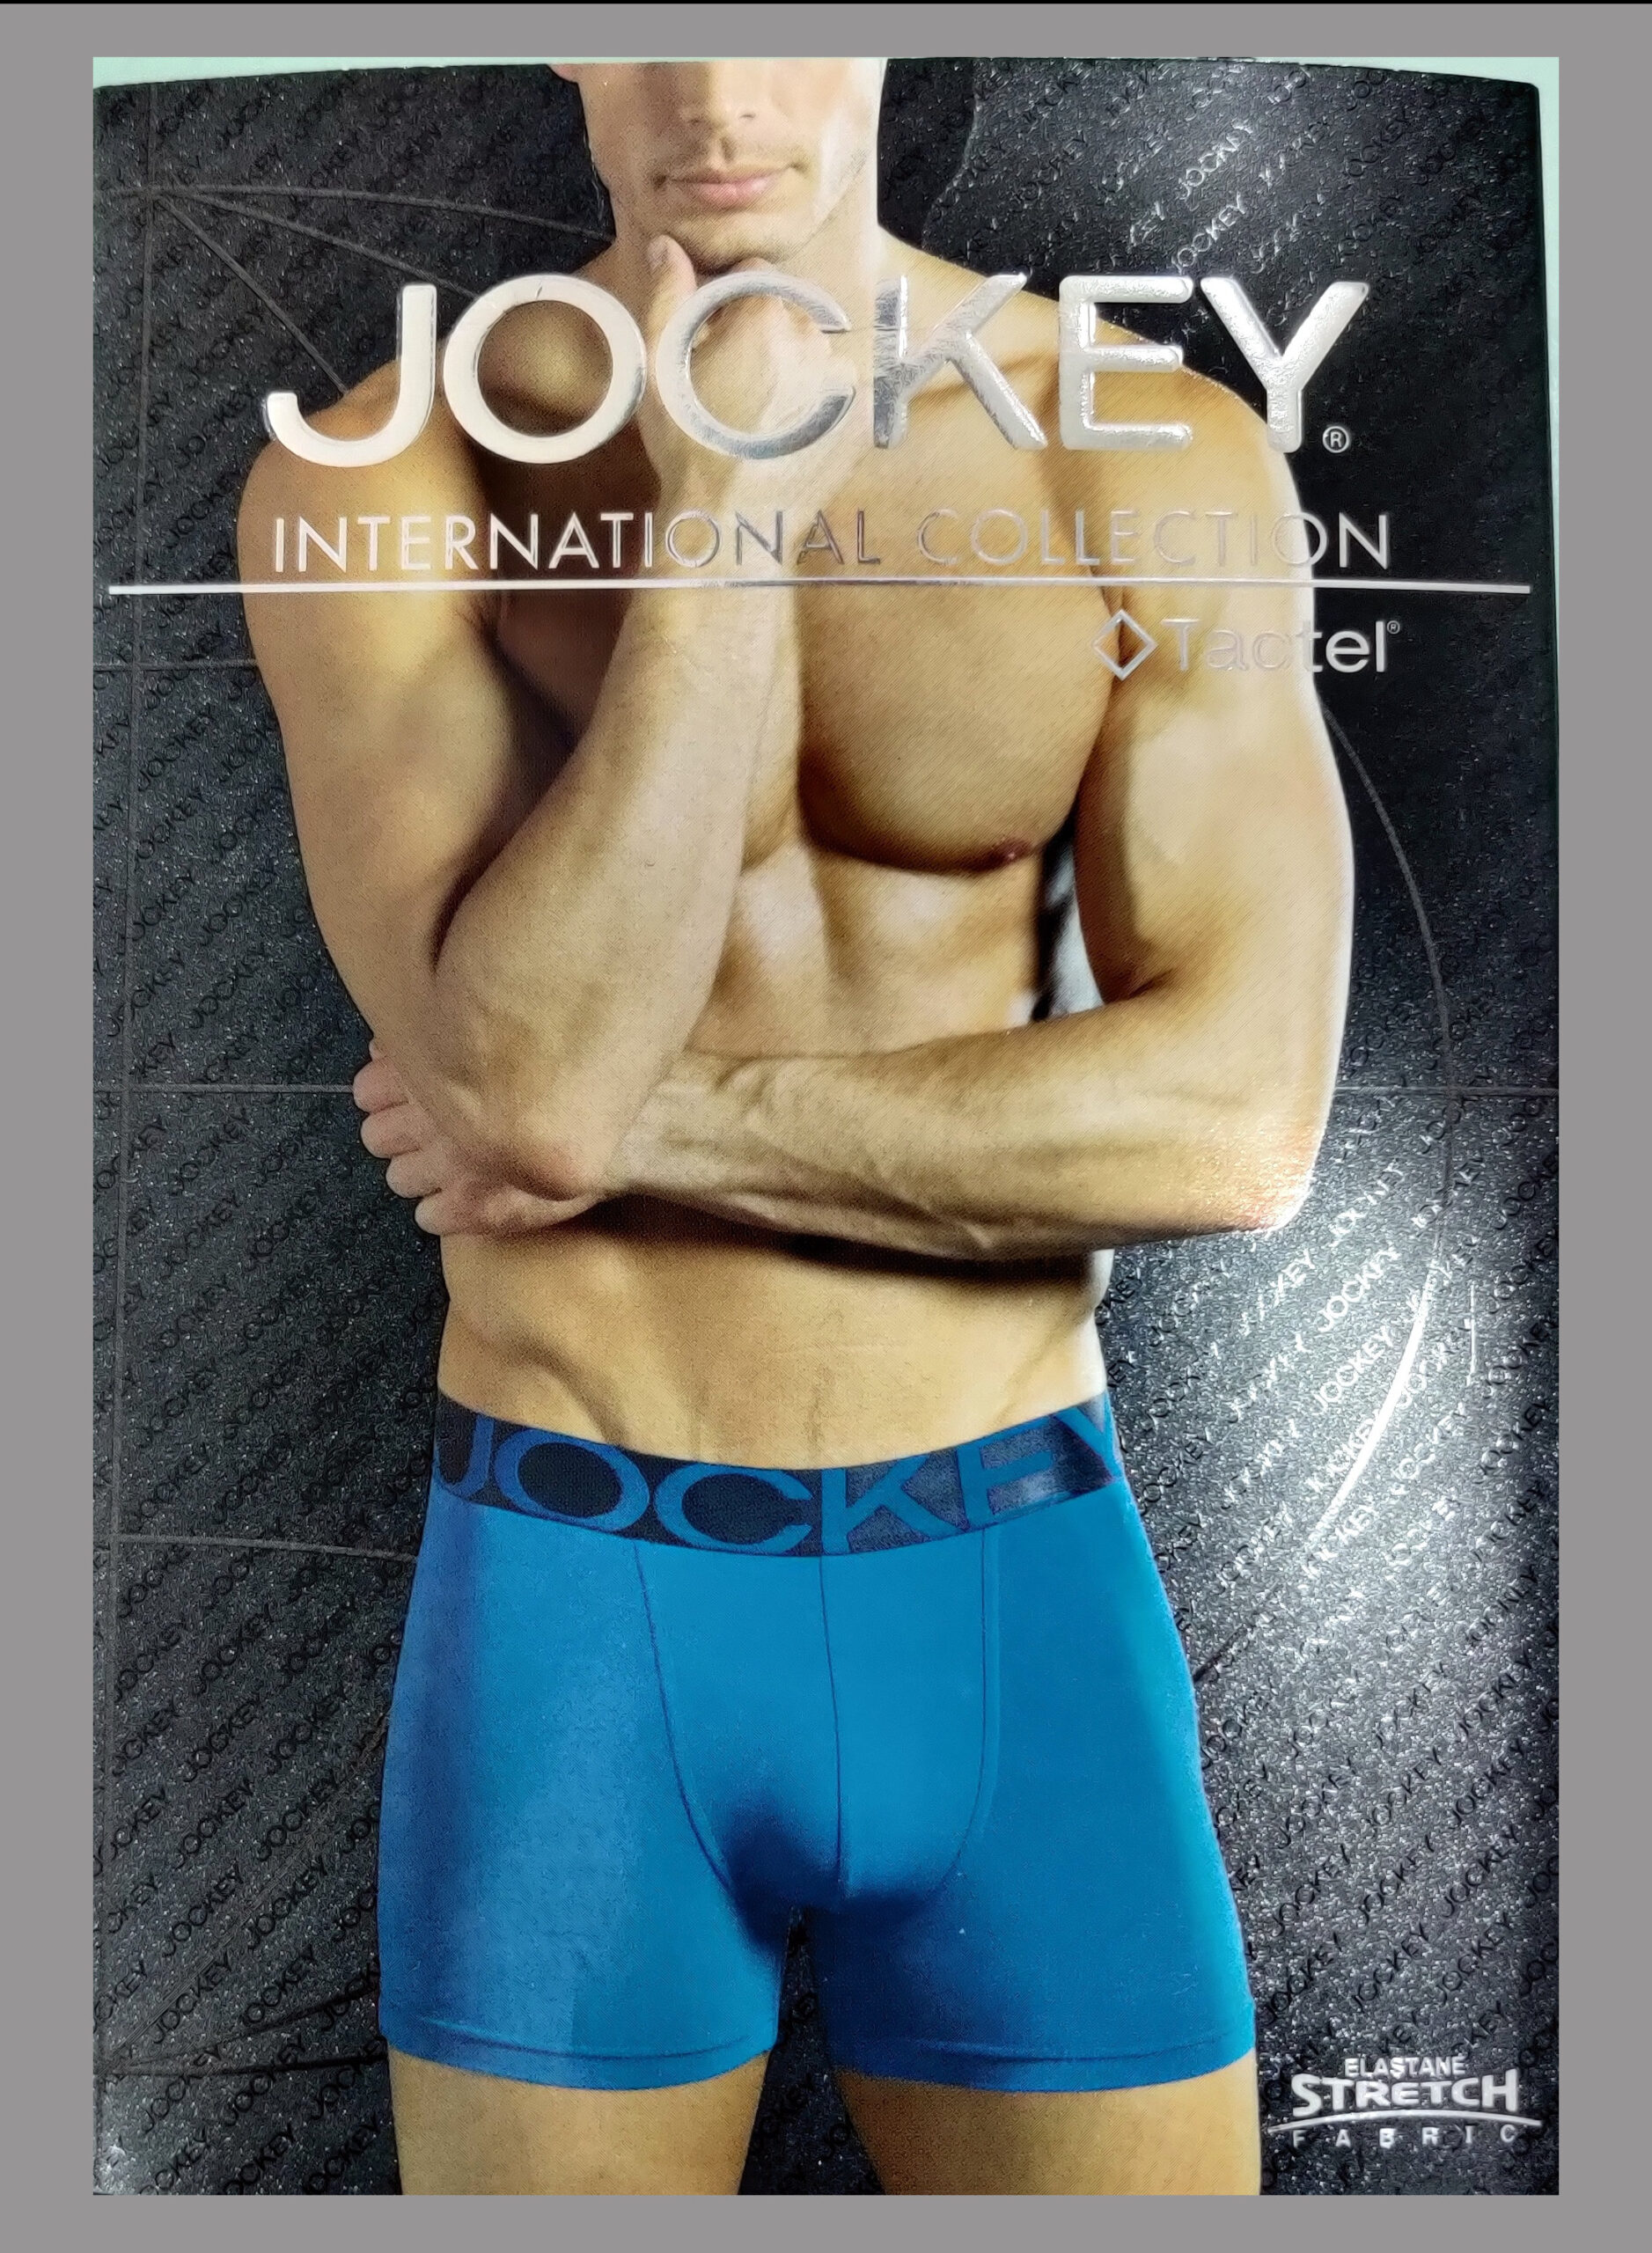 Jockey Brief #US 67 – Lachic Innerwear and Cosmetics